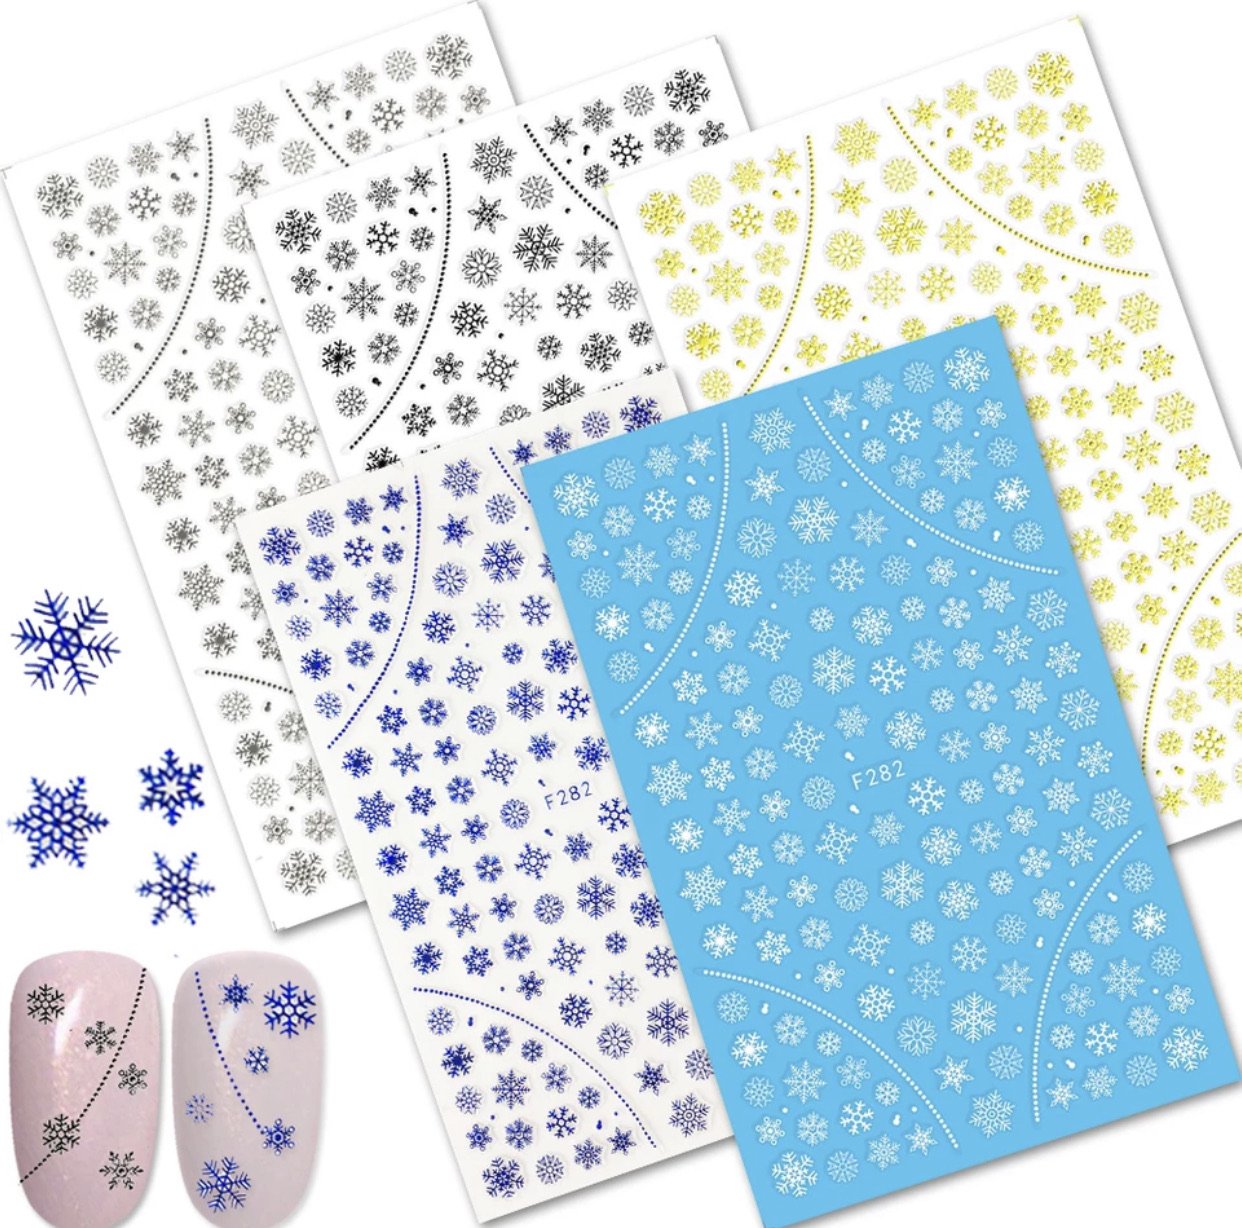 Snowflake nail art stickers